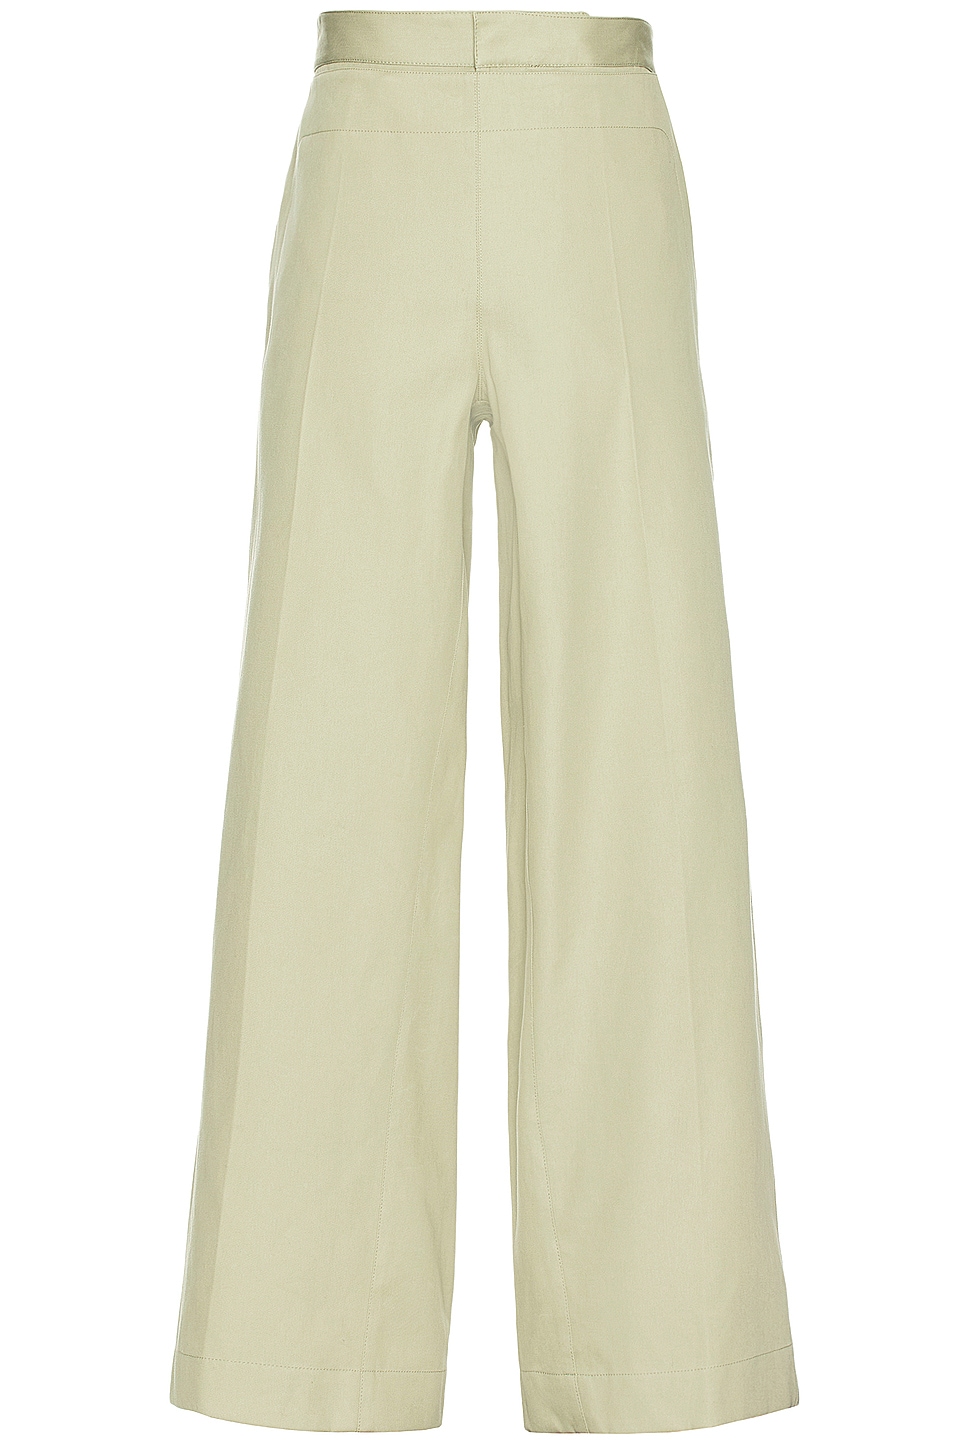 Image 1 of Bottega Veneta Sailor Trousers in Travertine